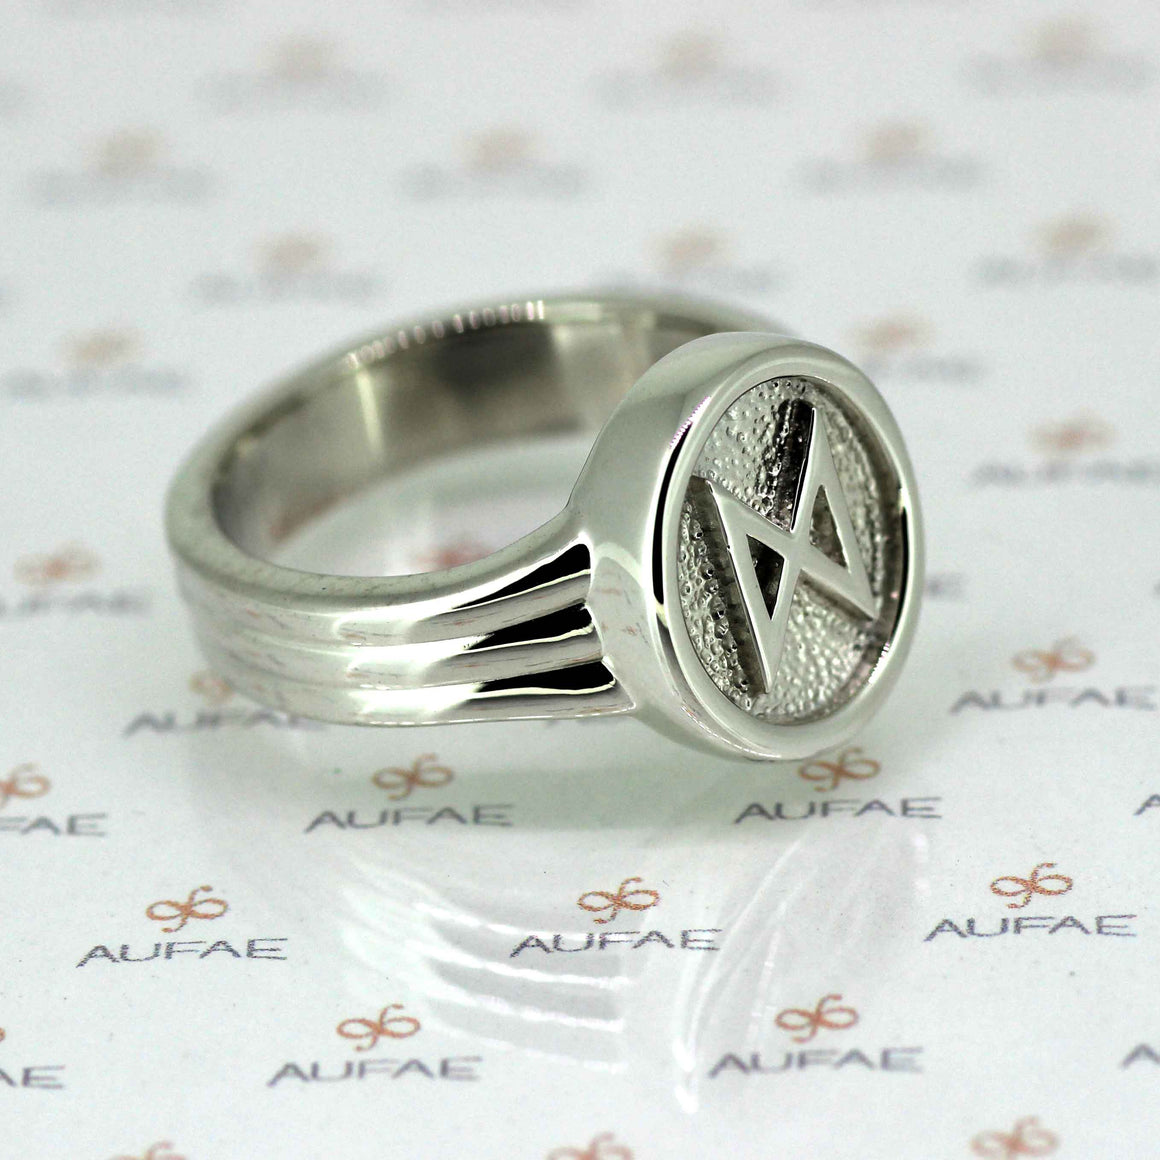 Aufae Dagaz Rune Ring in Sterling Silver